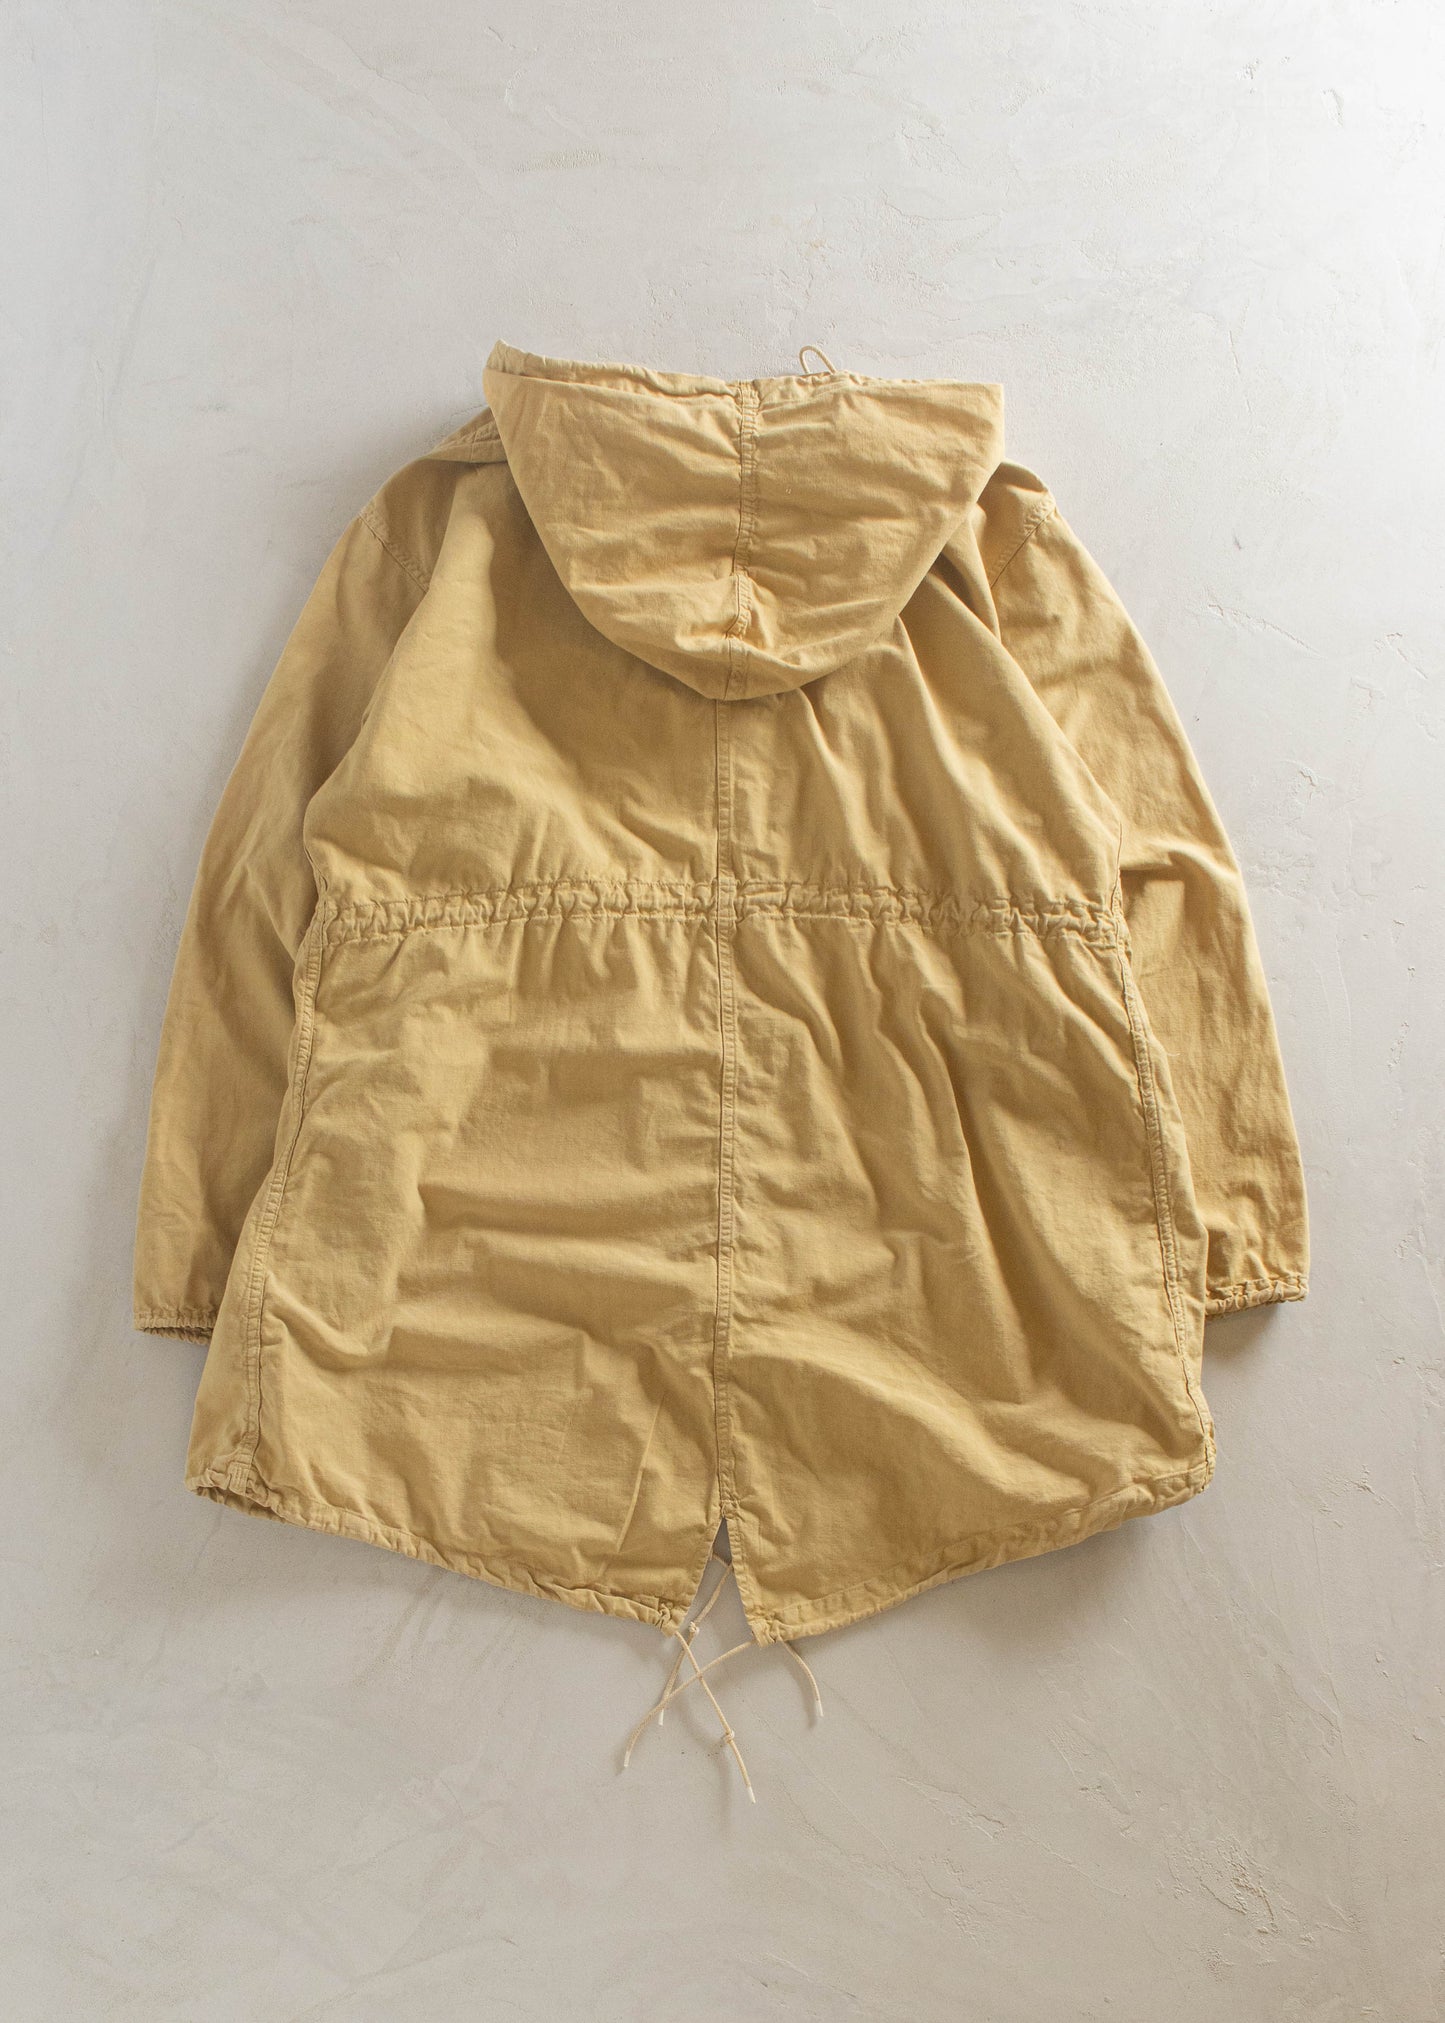 1980s A.T & Co Fishtail Jacket Size 2XL/3XL